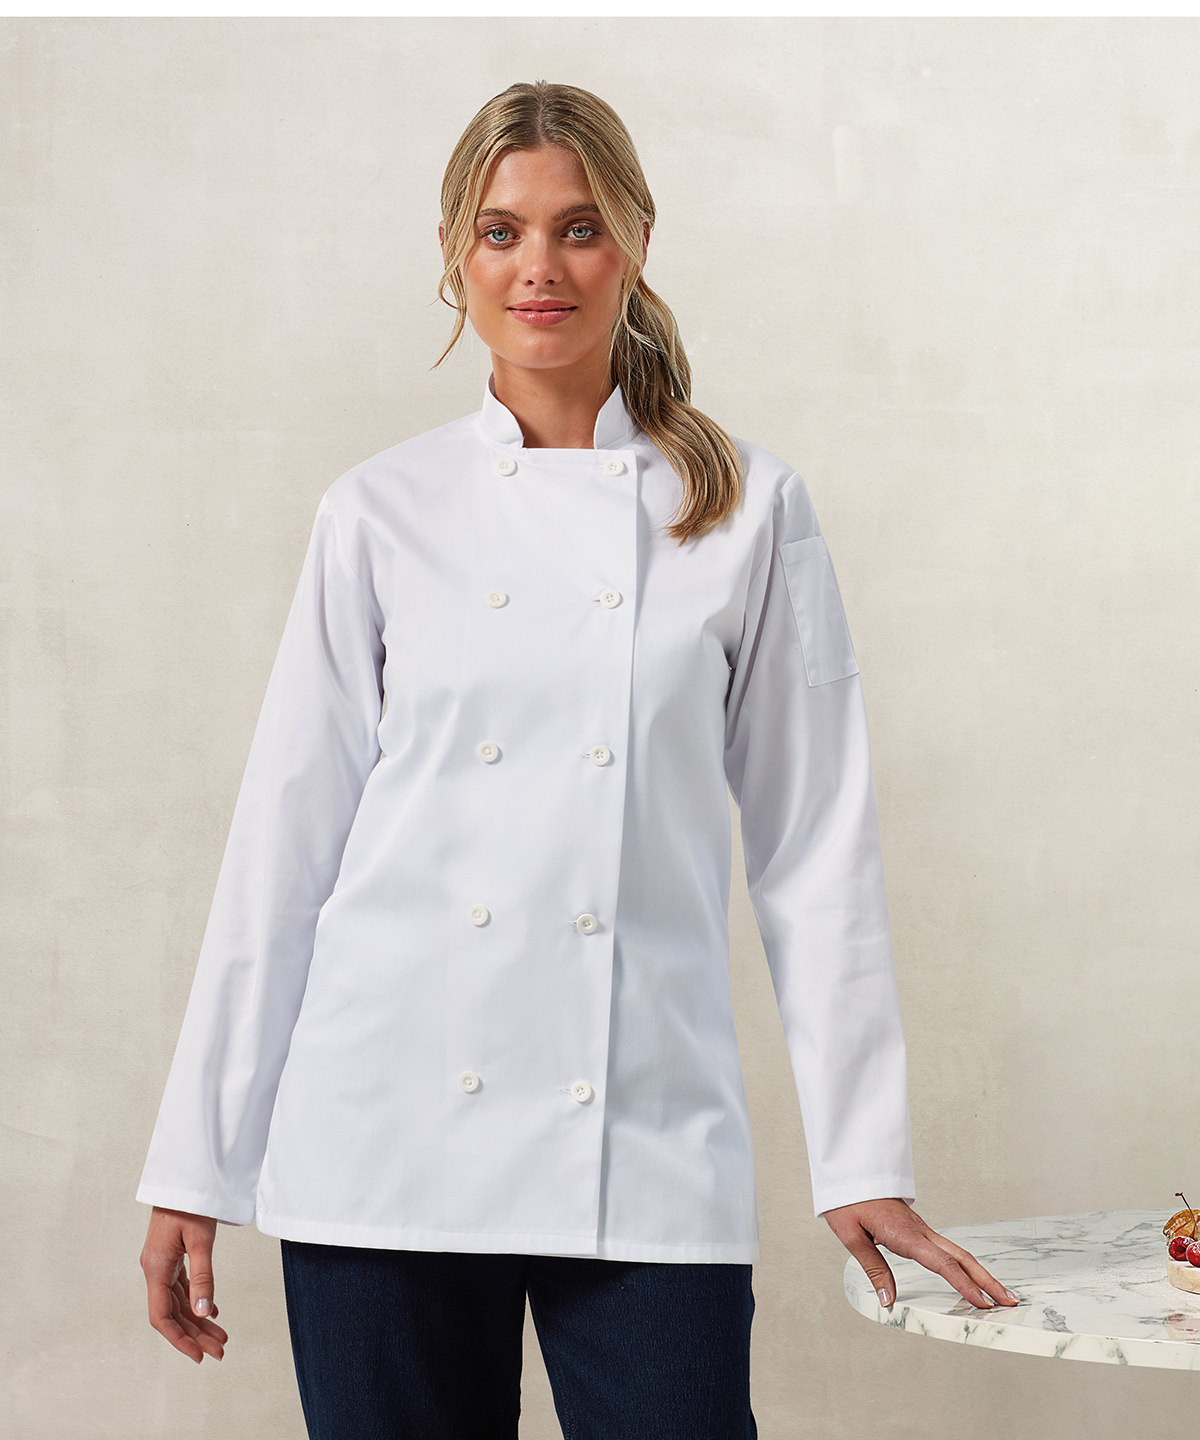 women's chef jackets-long sleeve-pr671